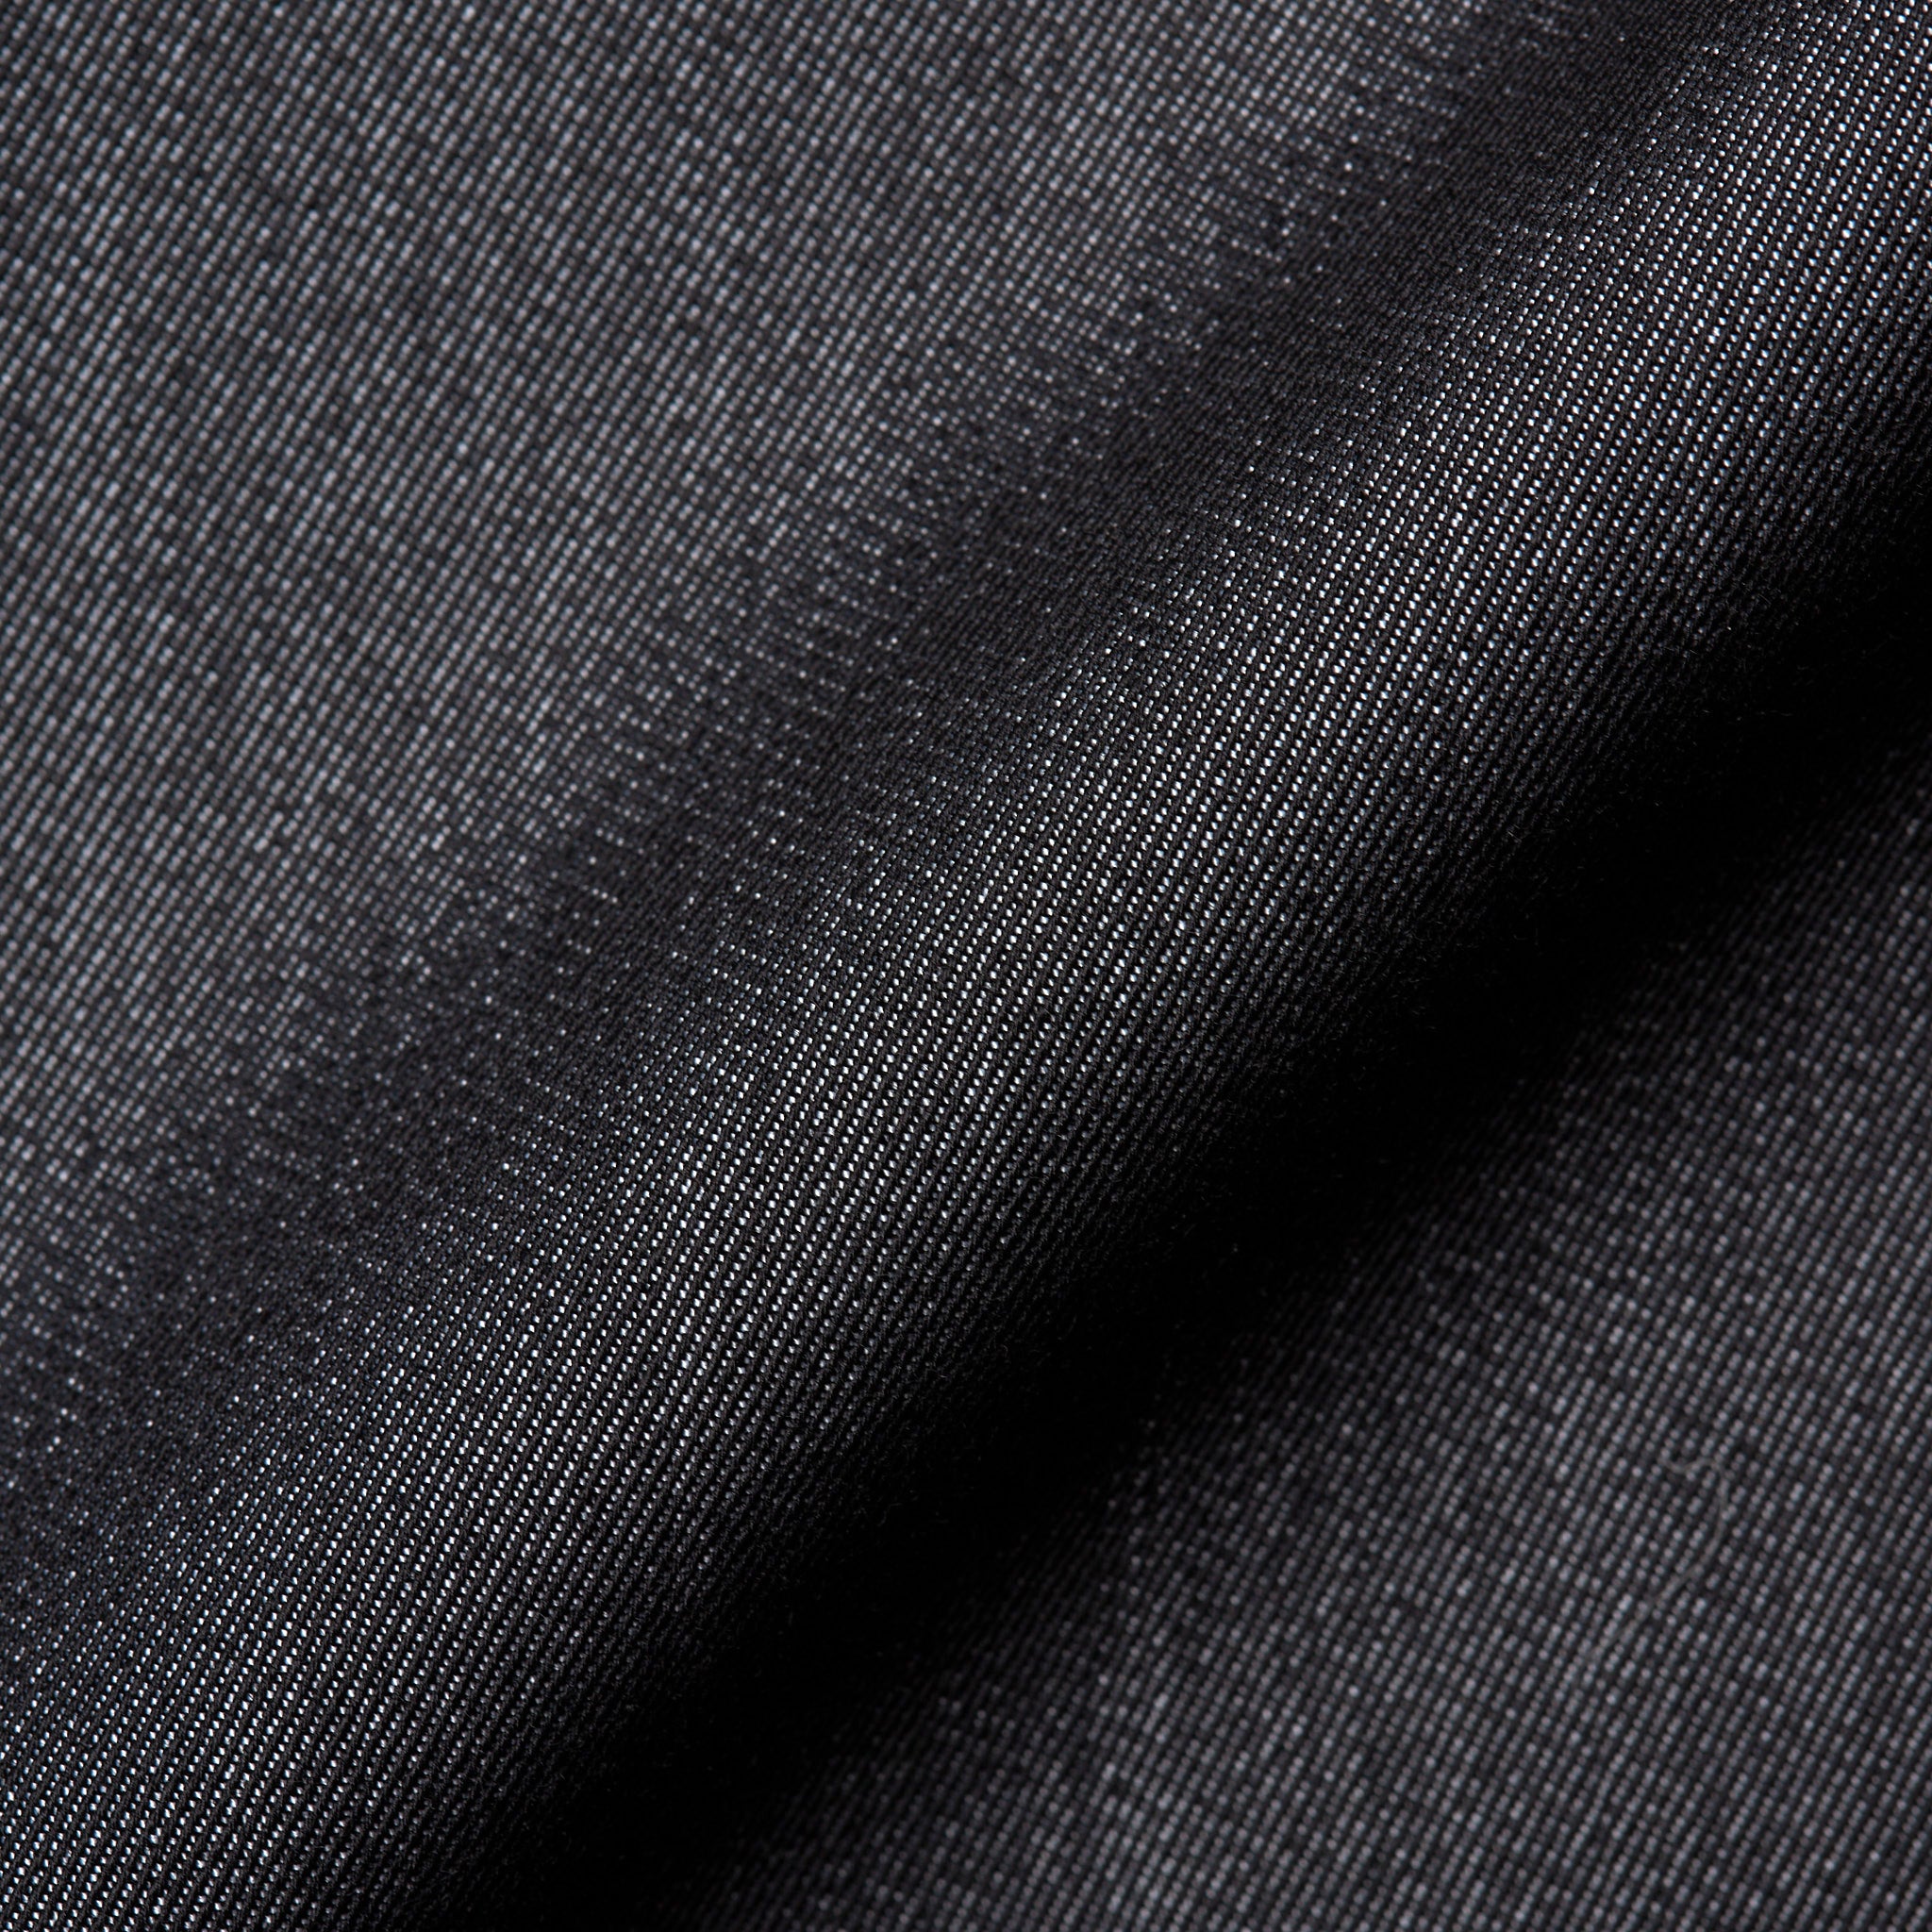 D'AVENZA Roma Handmade Gray Wool Blend Twill Suit EU 50 NEW US 40 D'AVENZA